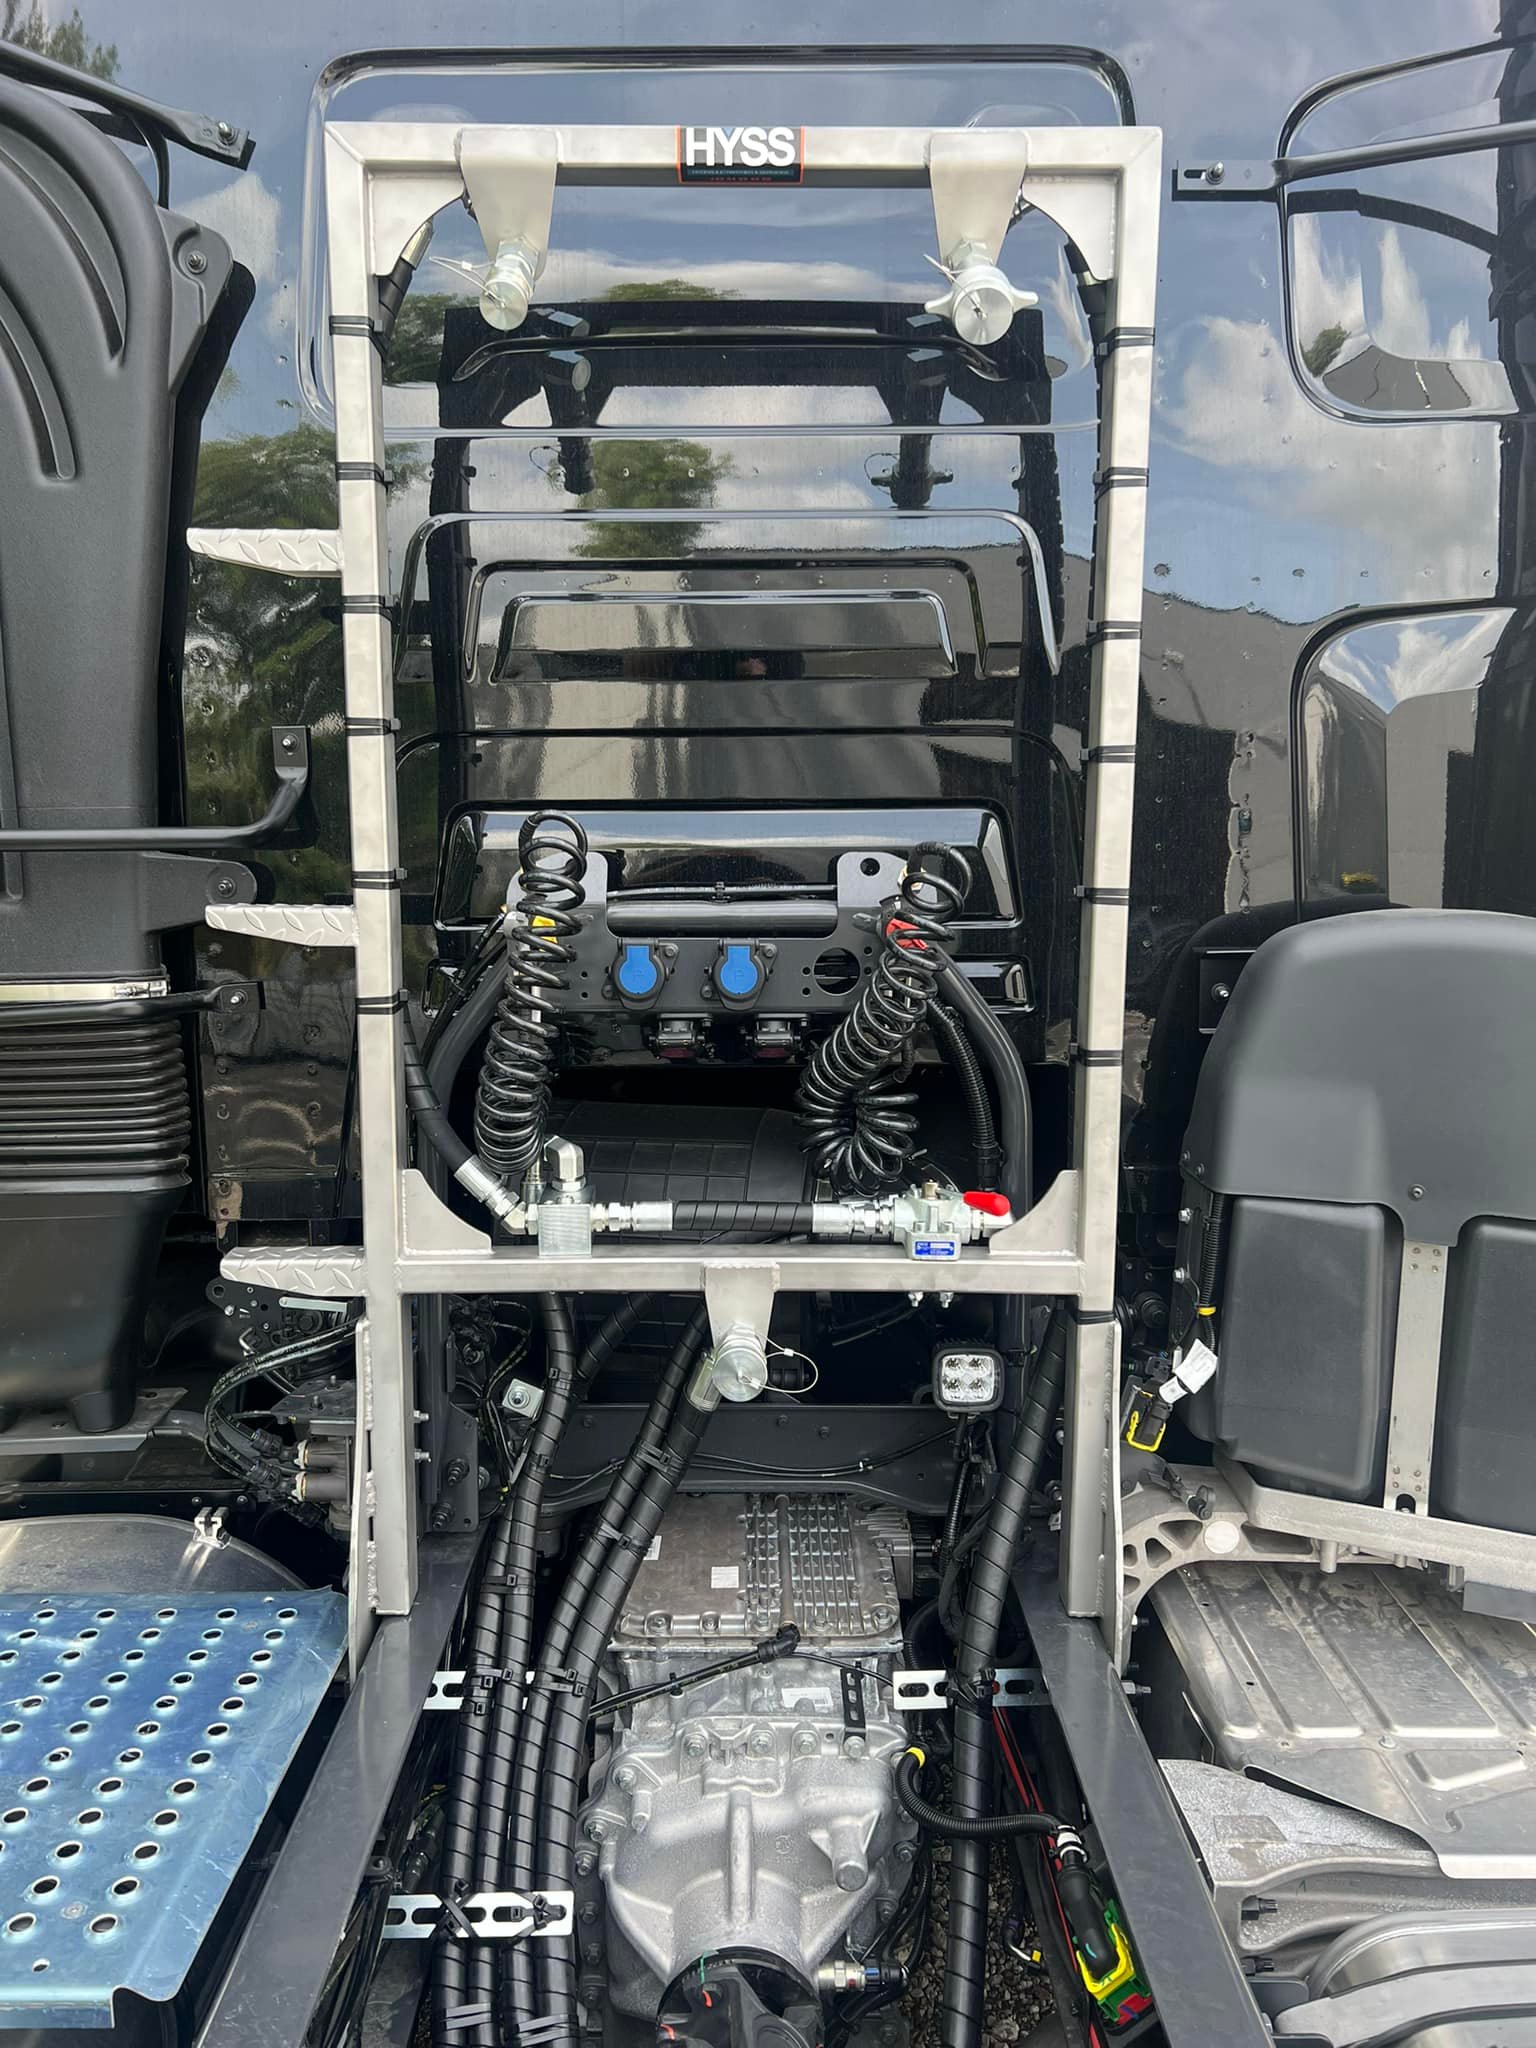 Een hydraulische systeem inclusief RVS frame achter de cabine